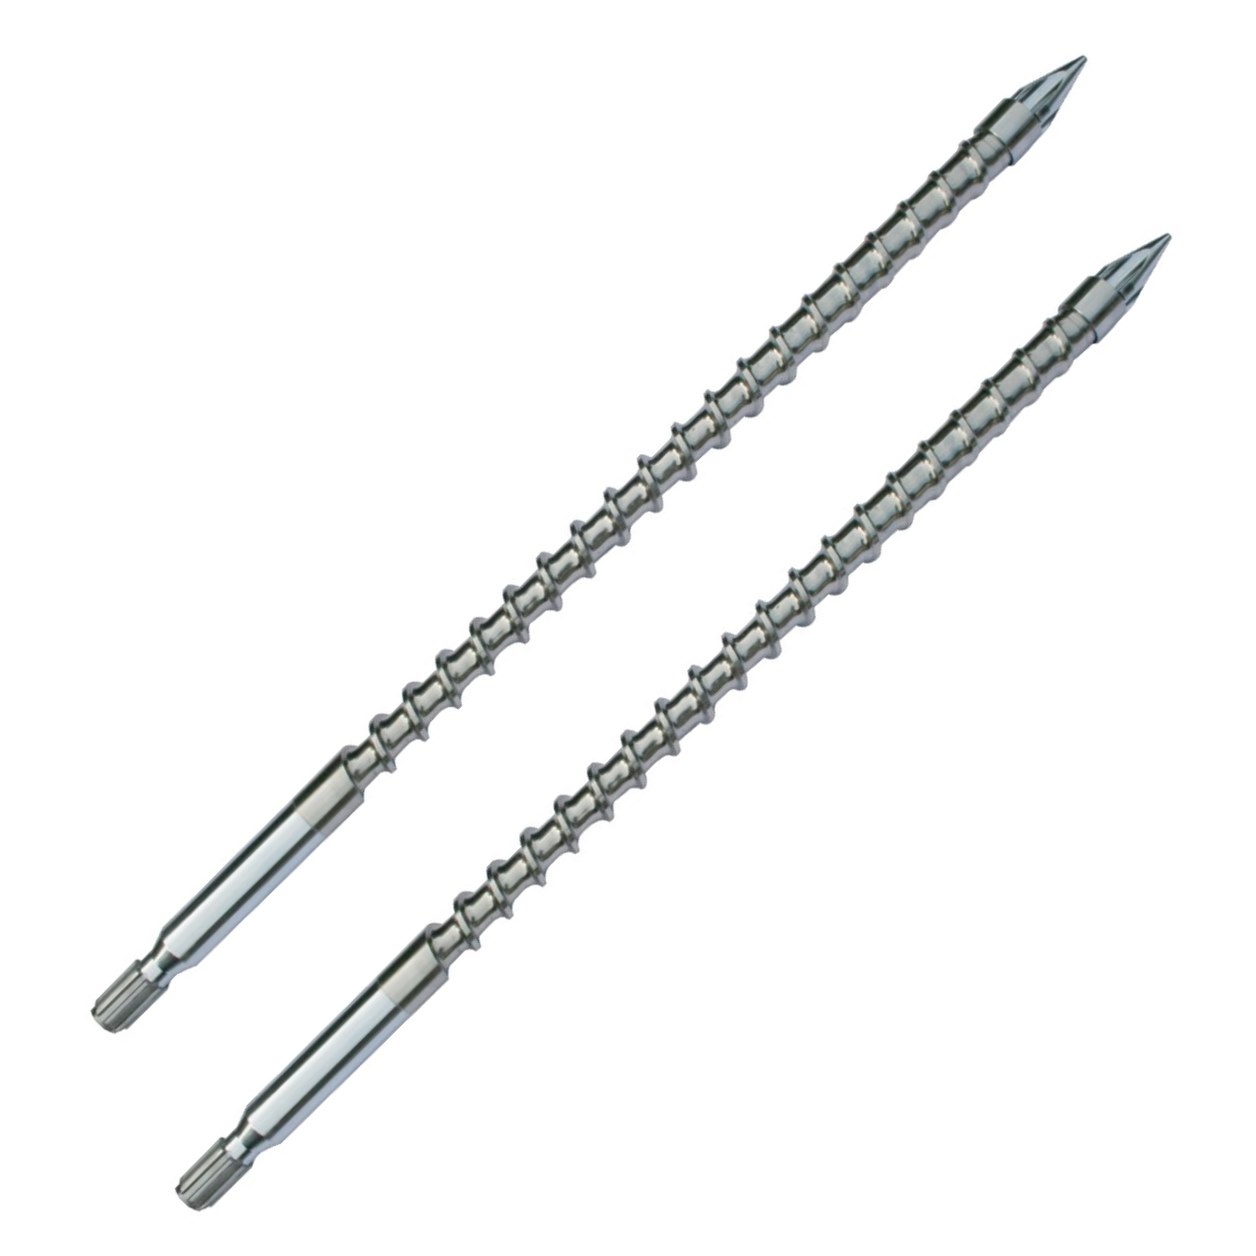 Specular light alloy steel screw